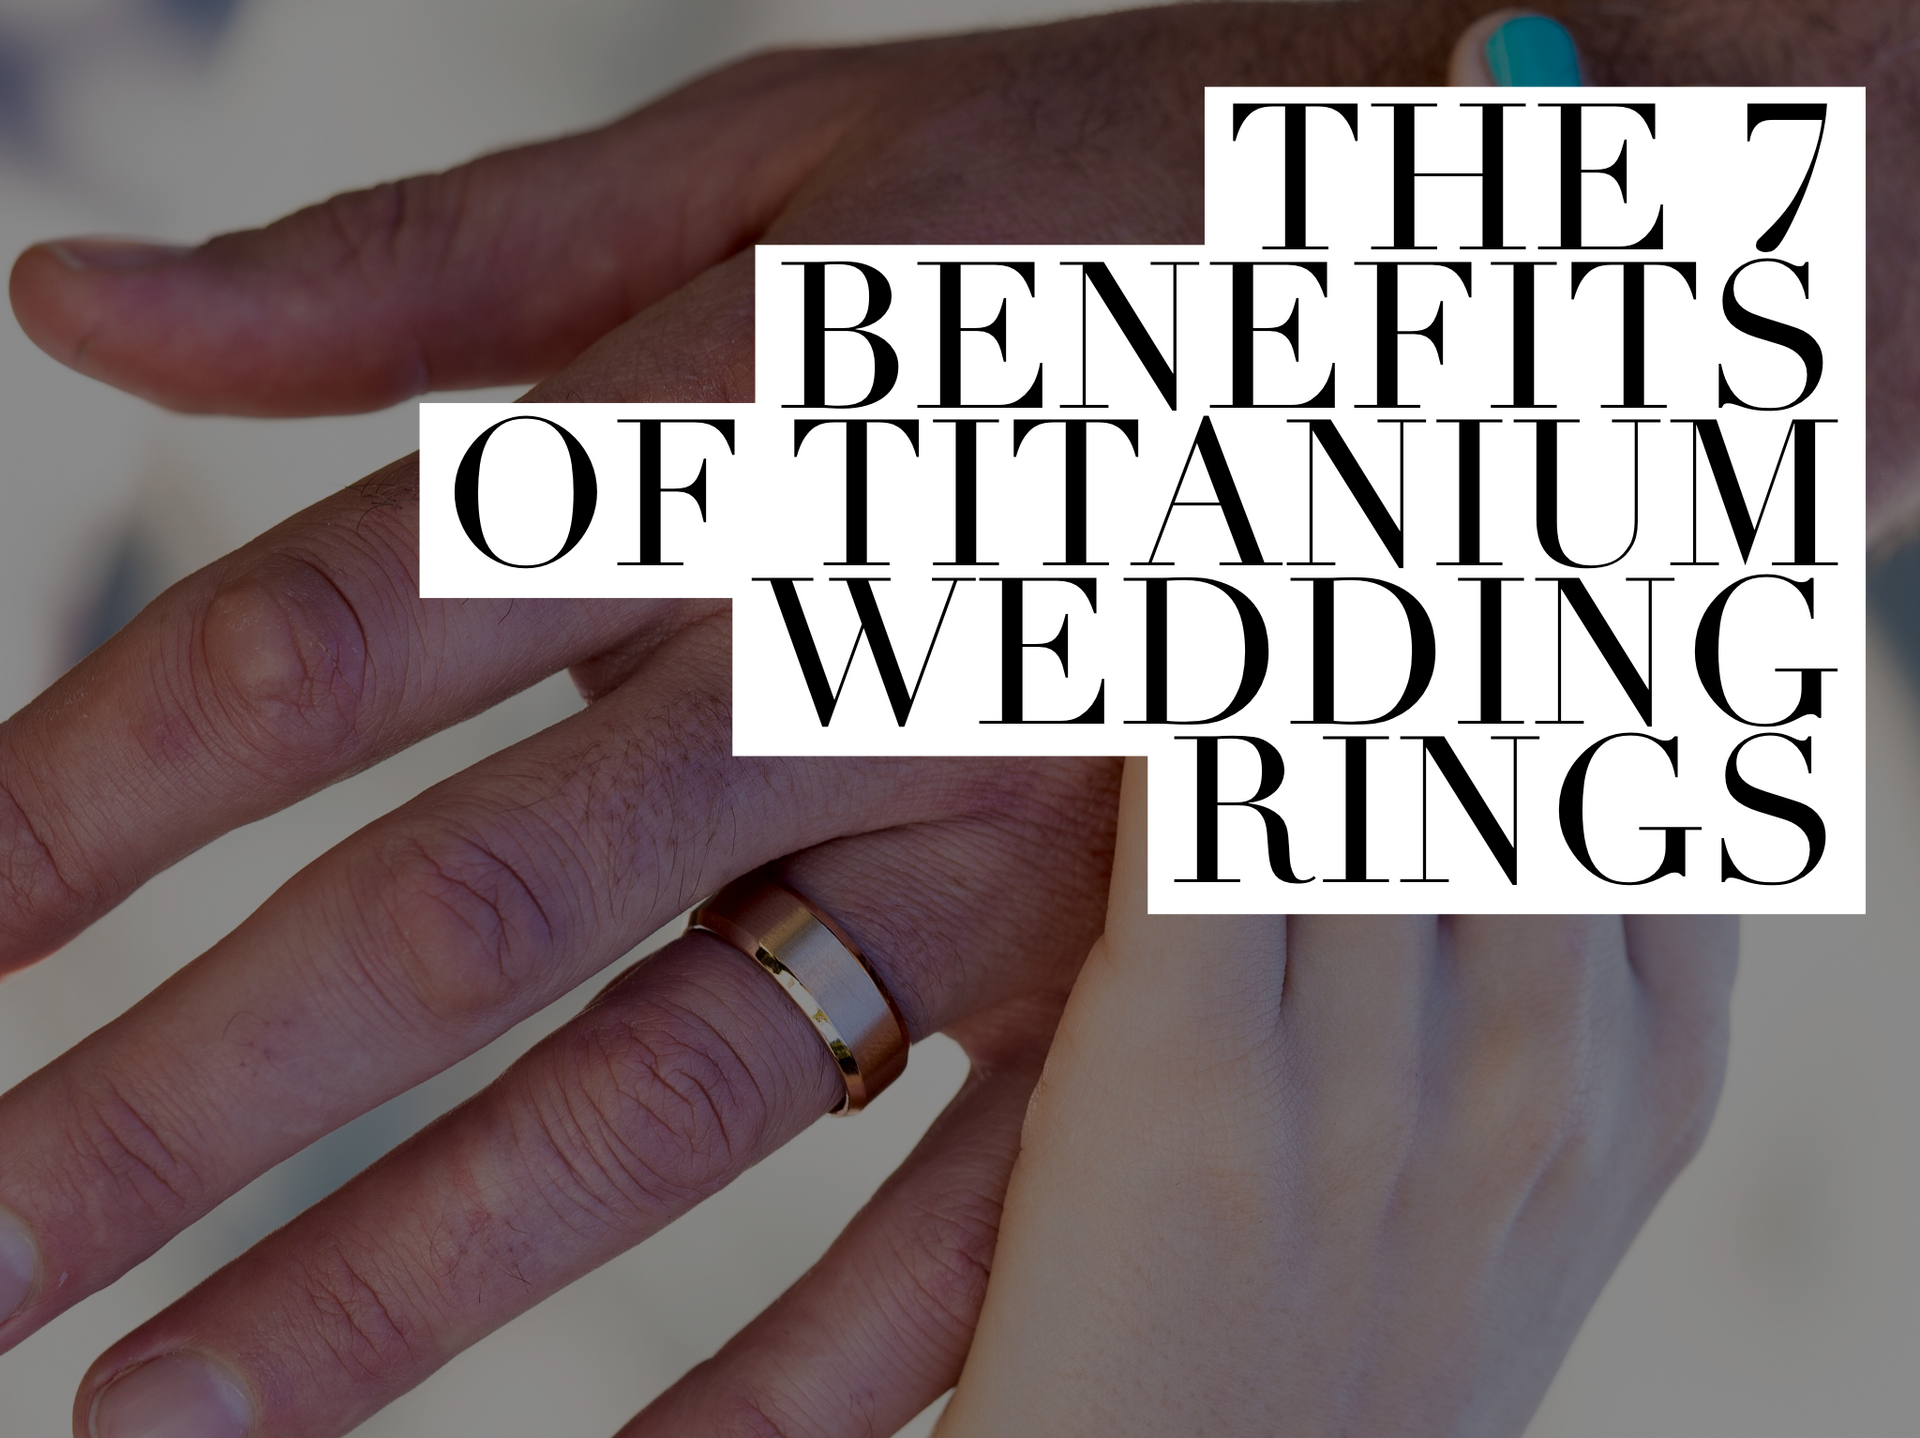 The 7 Benefits of Titanium Wedding Rings